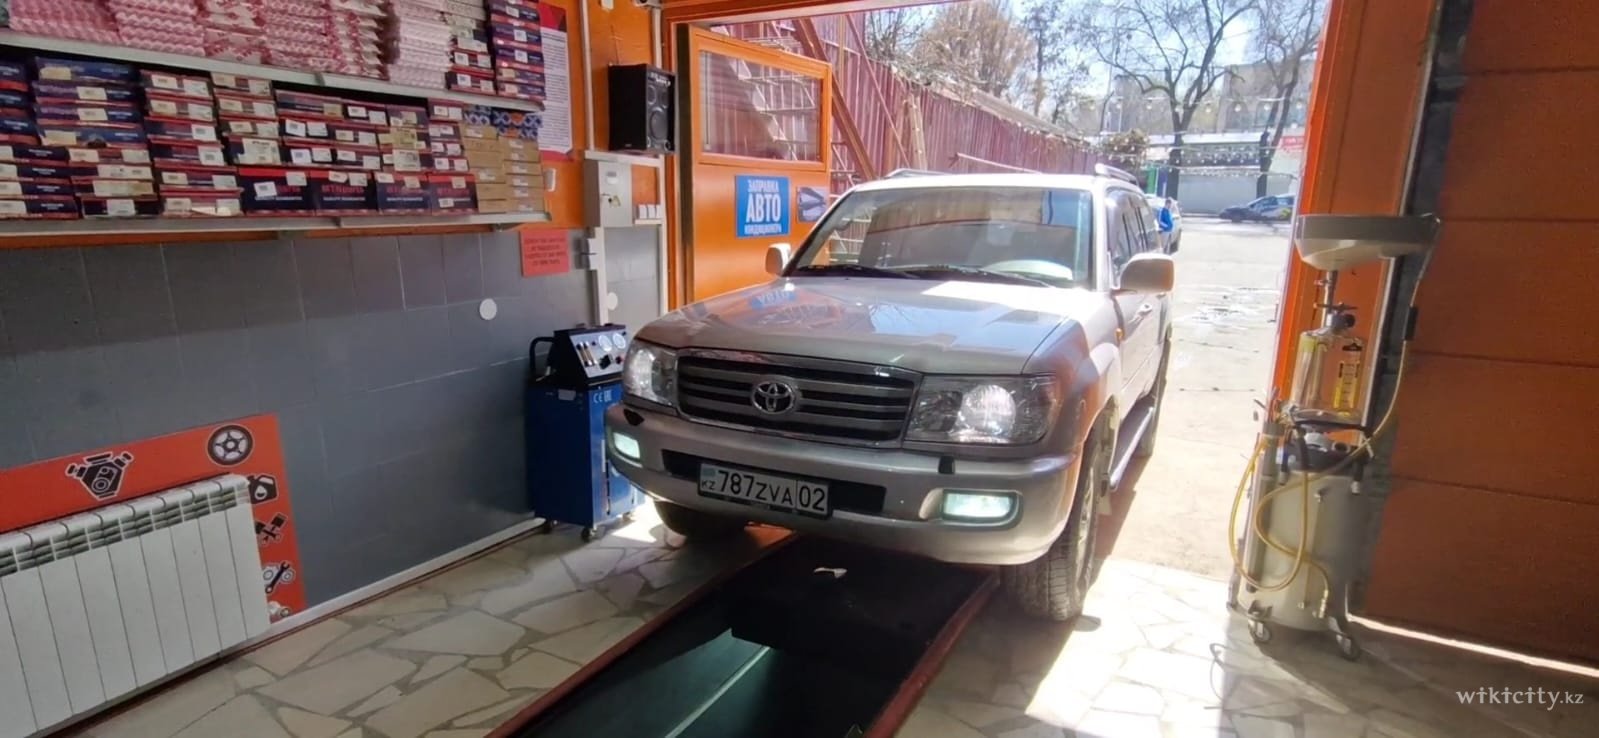 Фото GT oil service Пункт замены масла №16 - Алматы